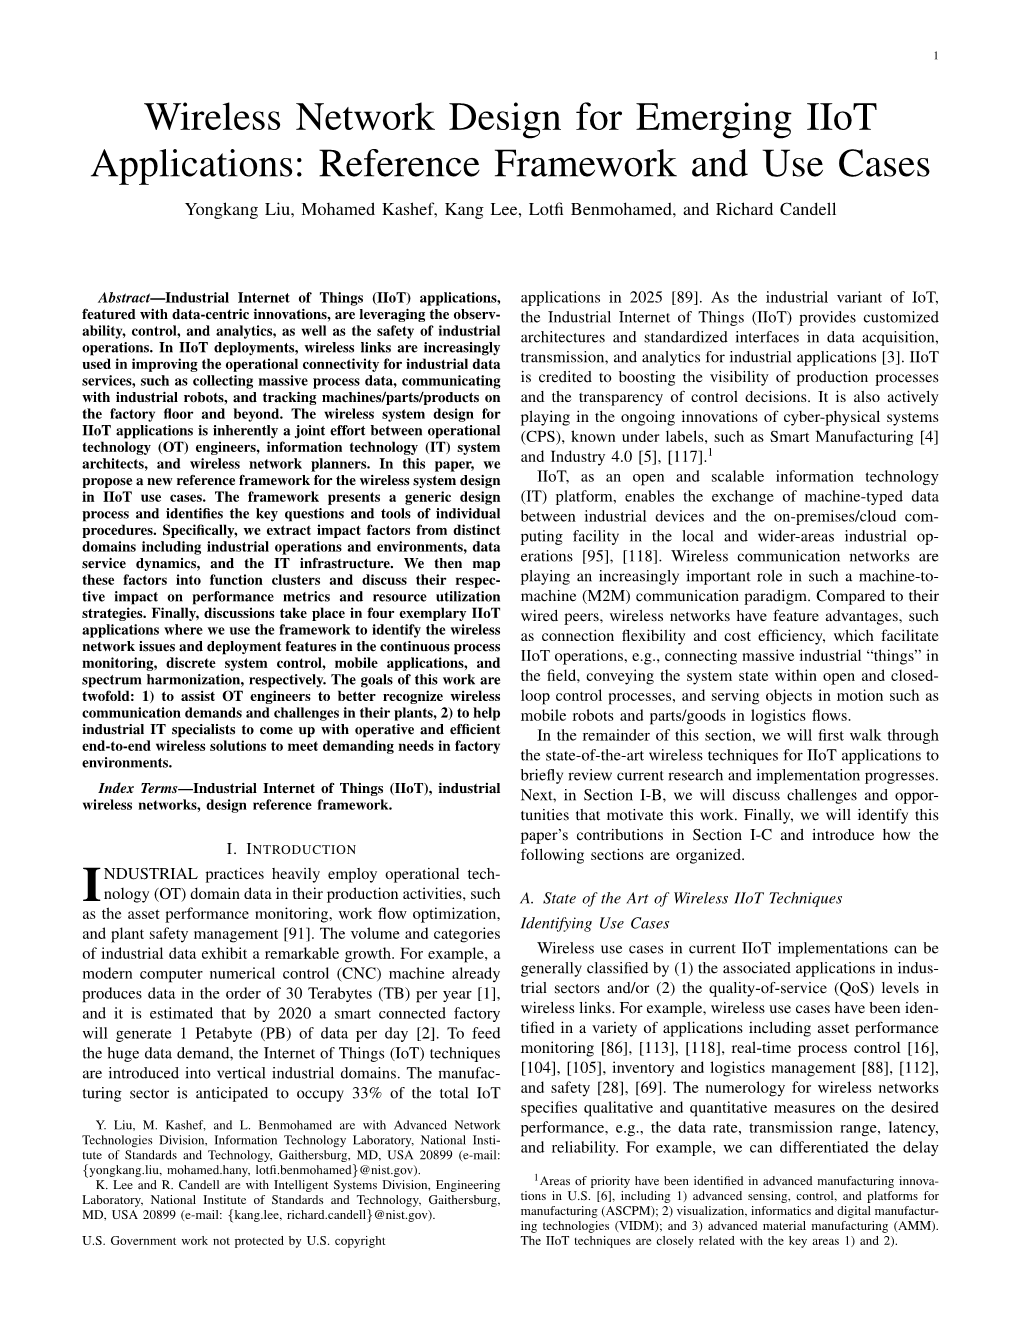 Wireless Network Design for Emerging Iiot Applications: Reference Framework and Use Cases Yongkang Liu, Mohamed Kashef, Kang Lee, Lotﬁ Benmohamed, and Richard Candell